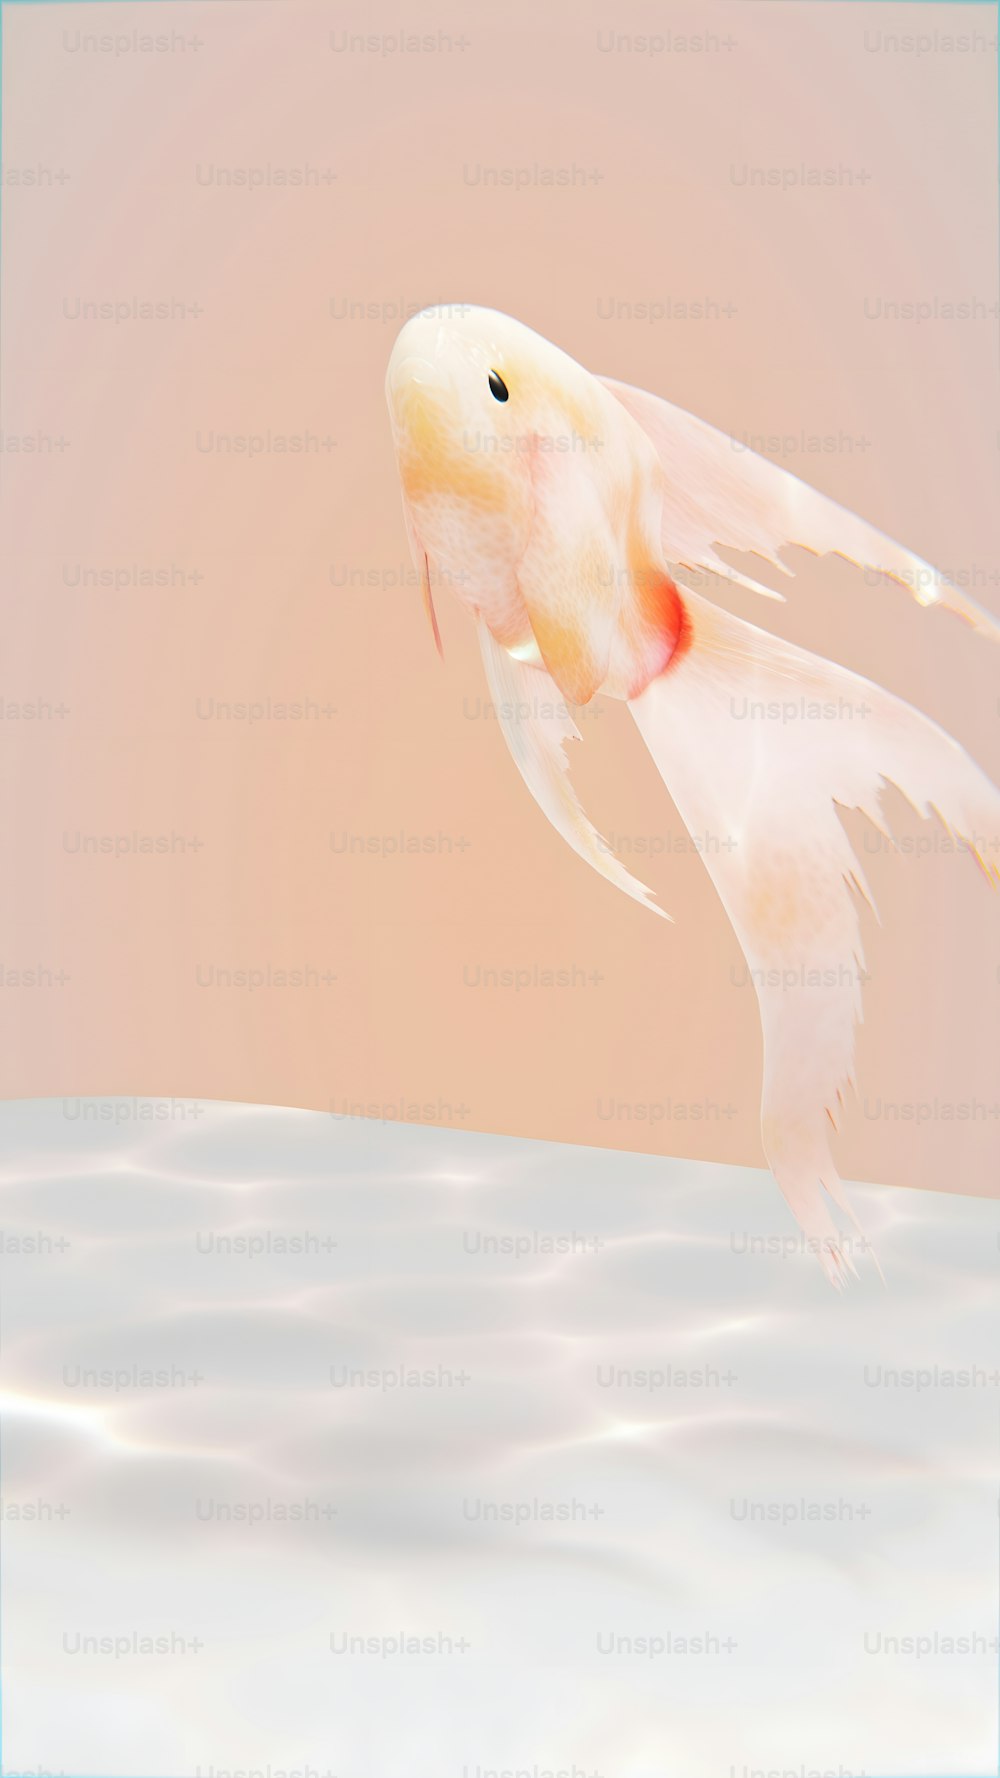 un pez dorado en vuelo con un fondo rosa